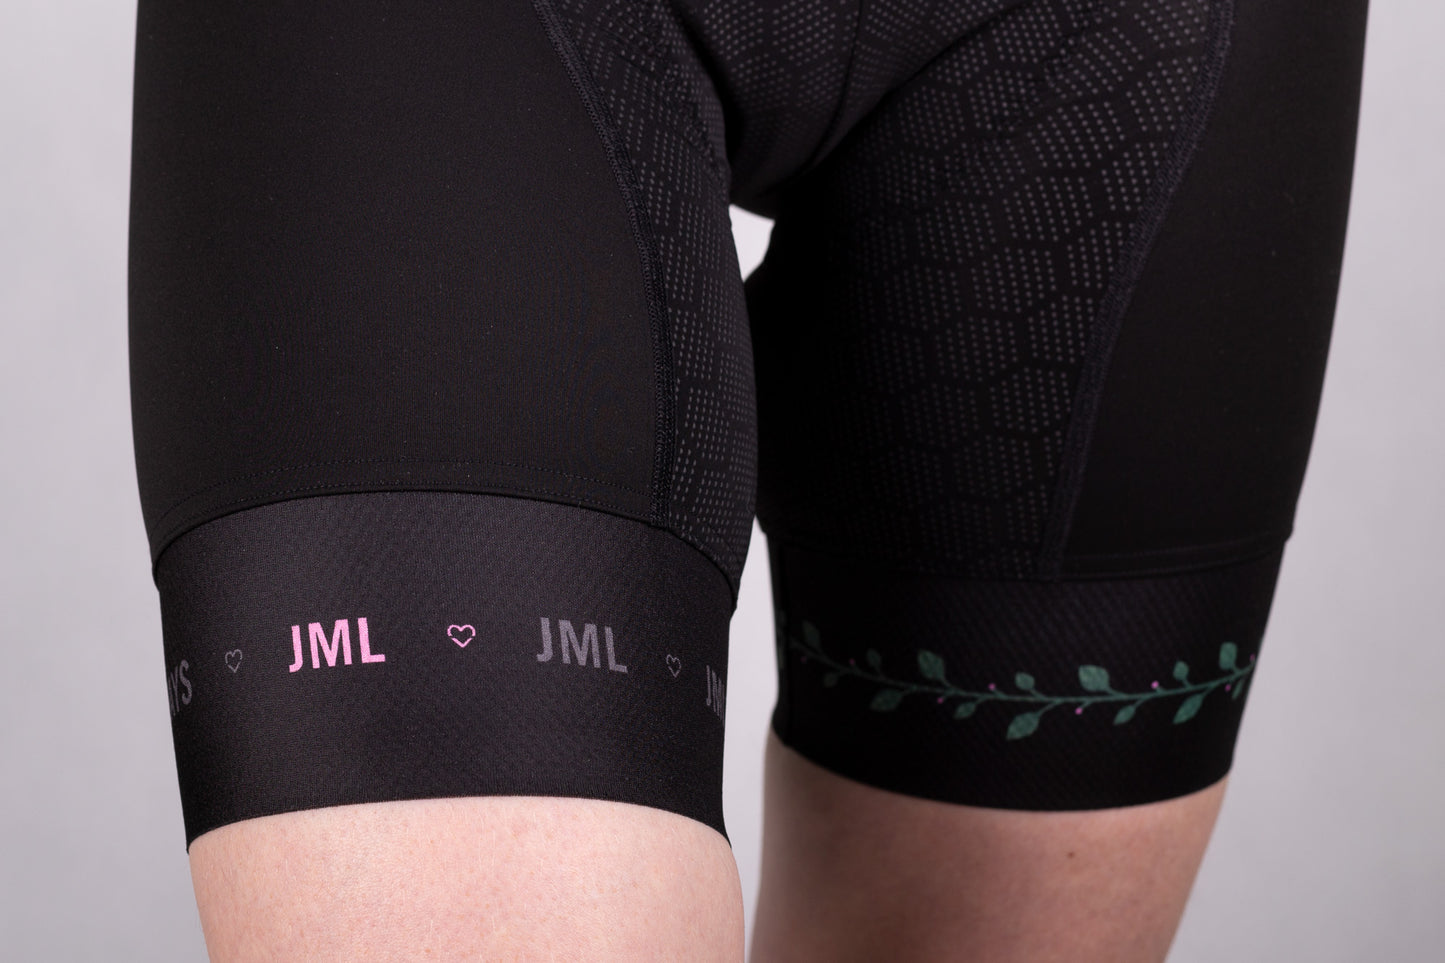 JML Torbole Bib Shorts - Jerseys Made with Love